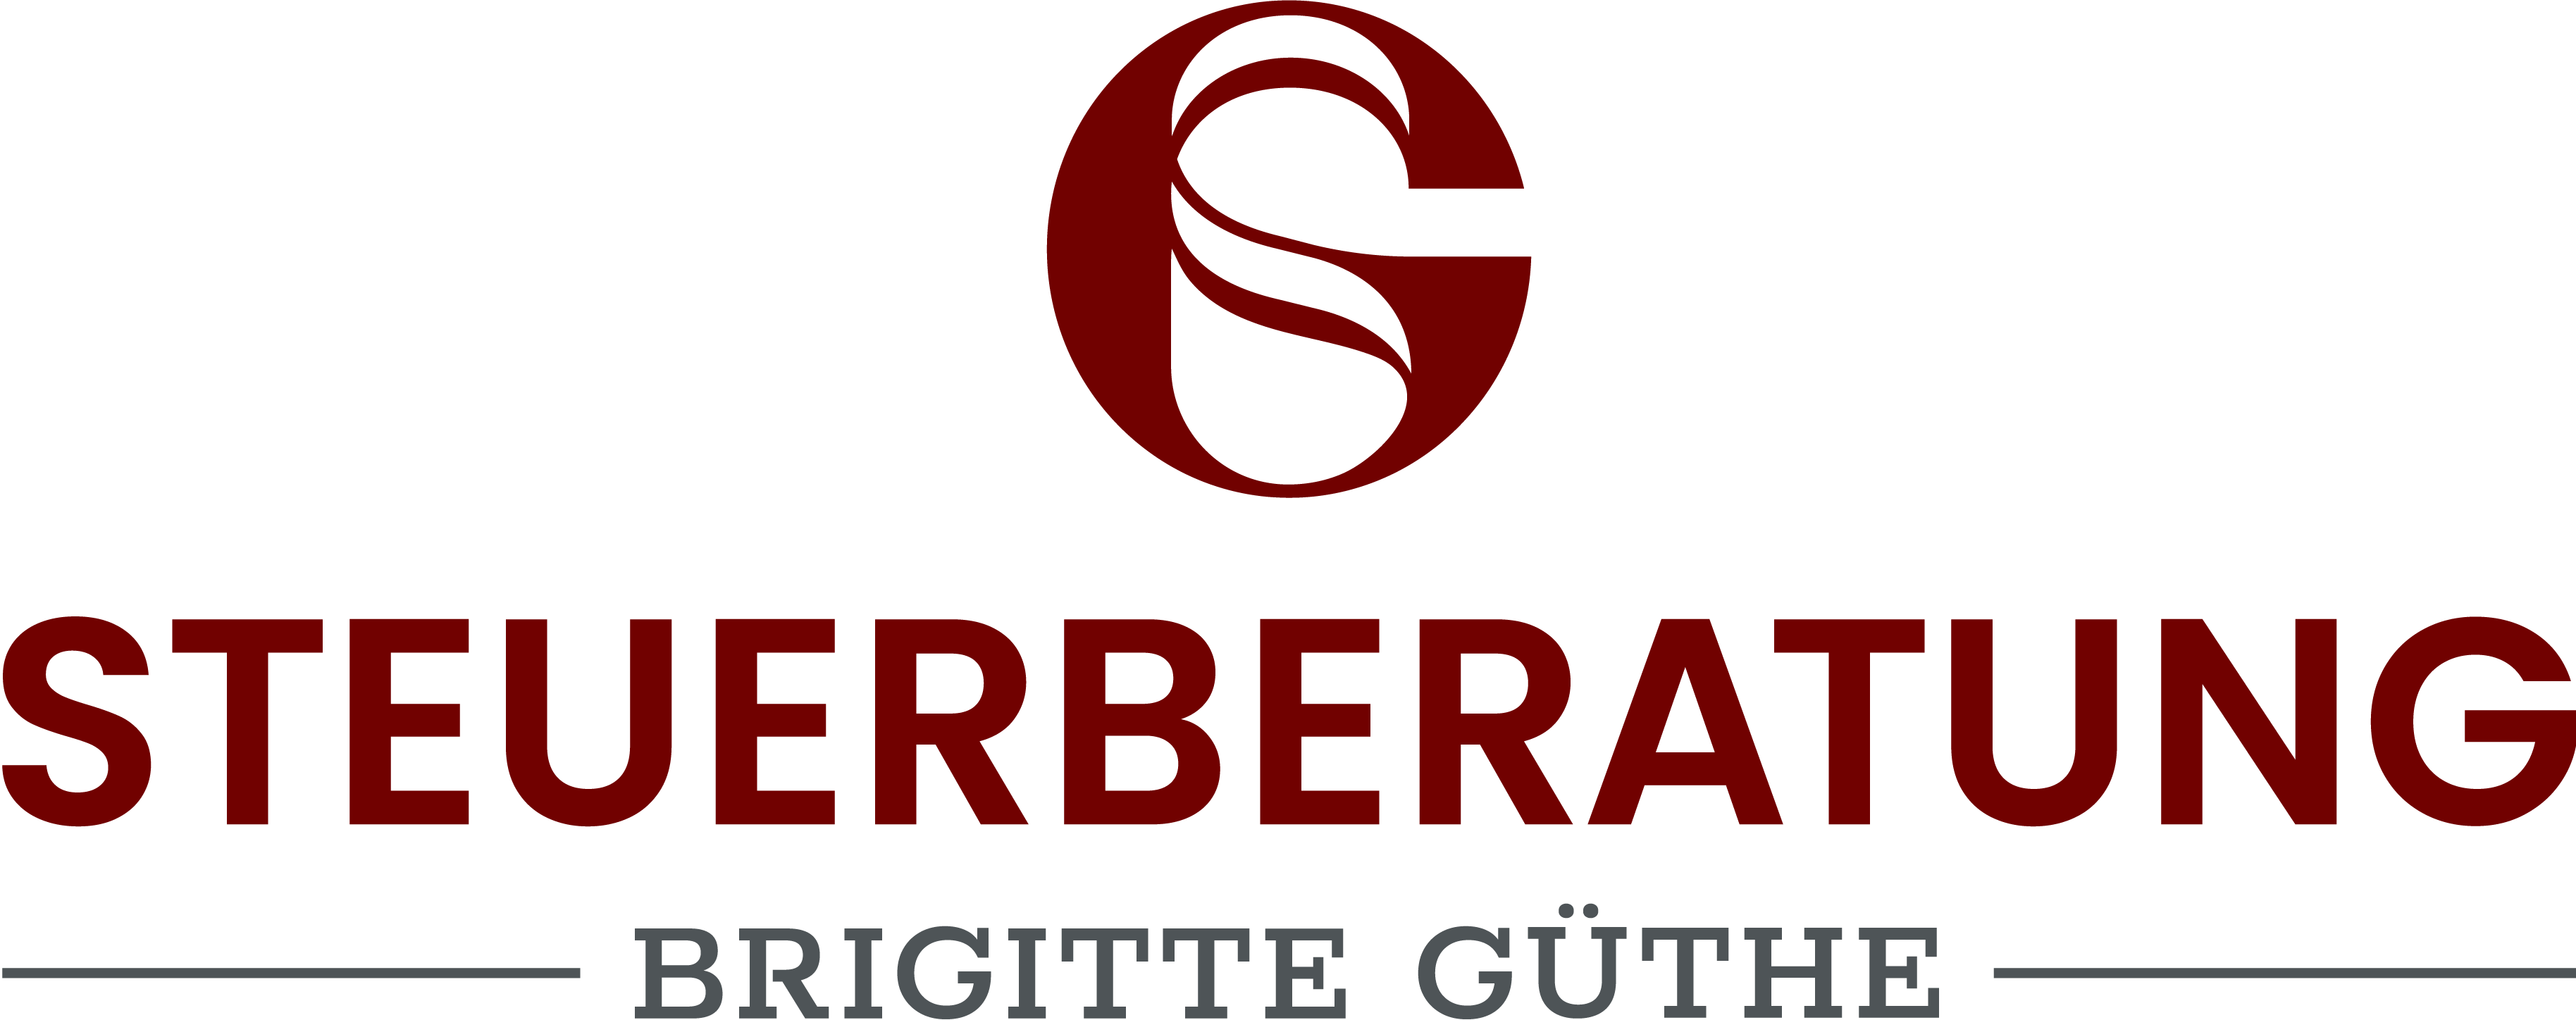 Steuerberatung Brigitte Güthe Logo